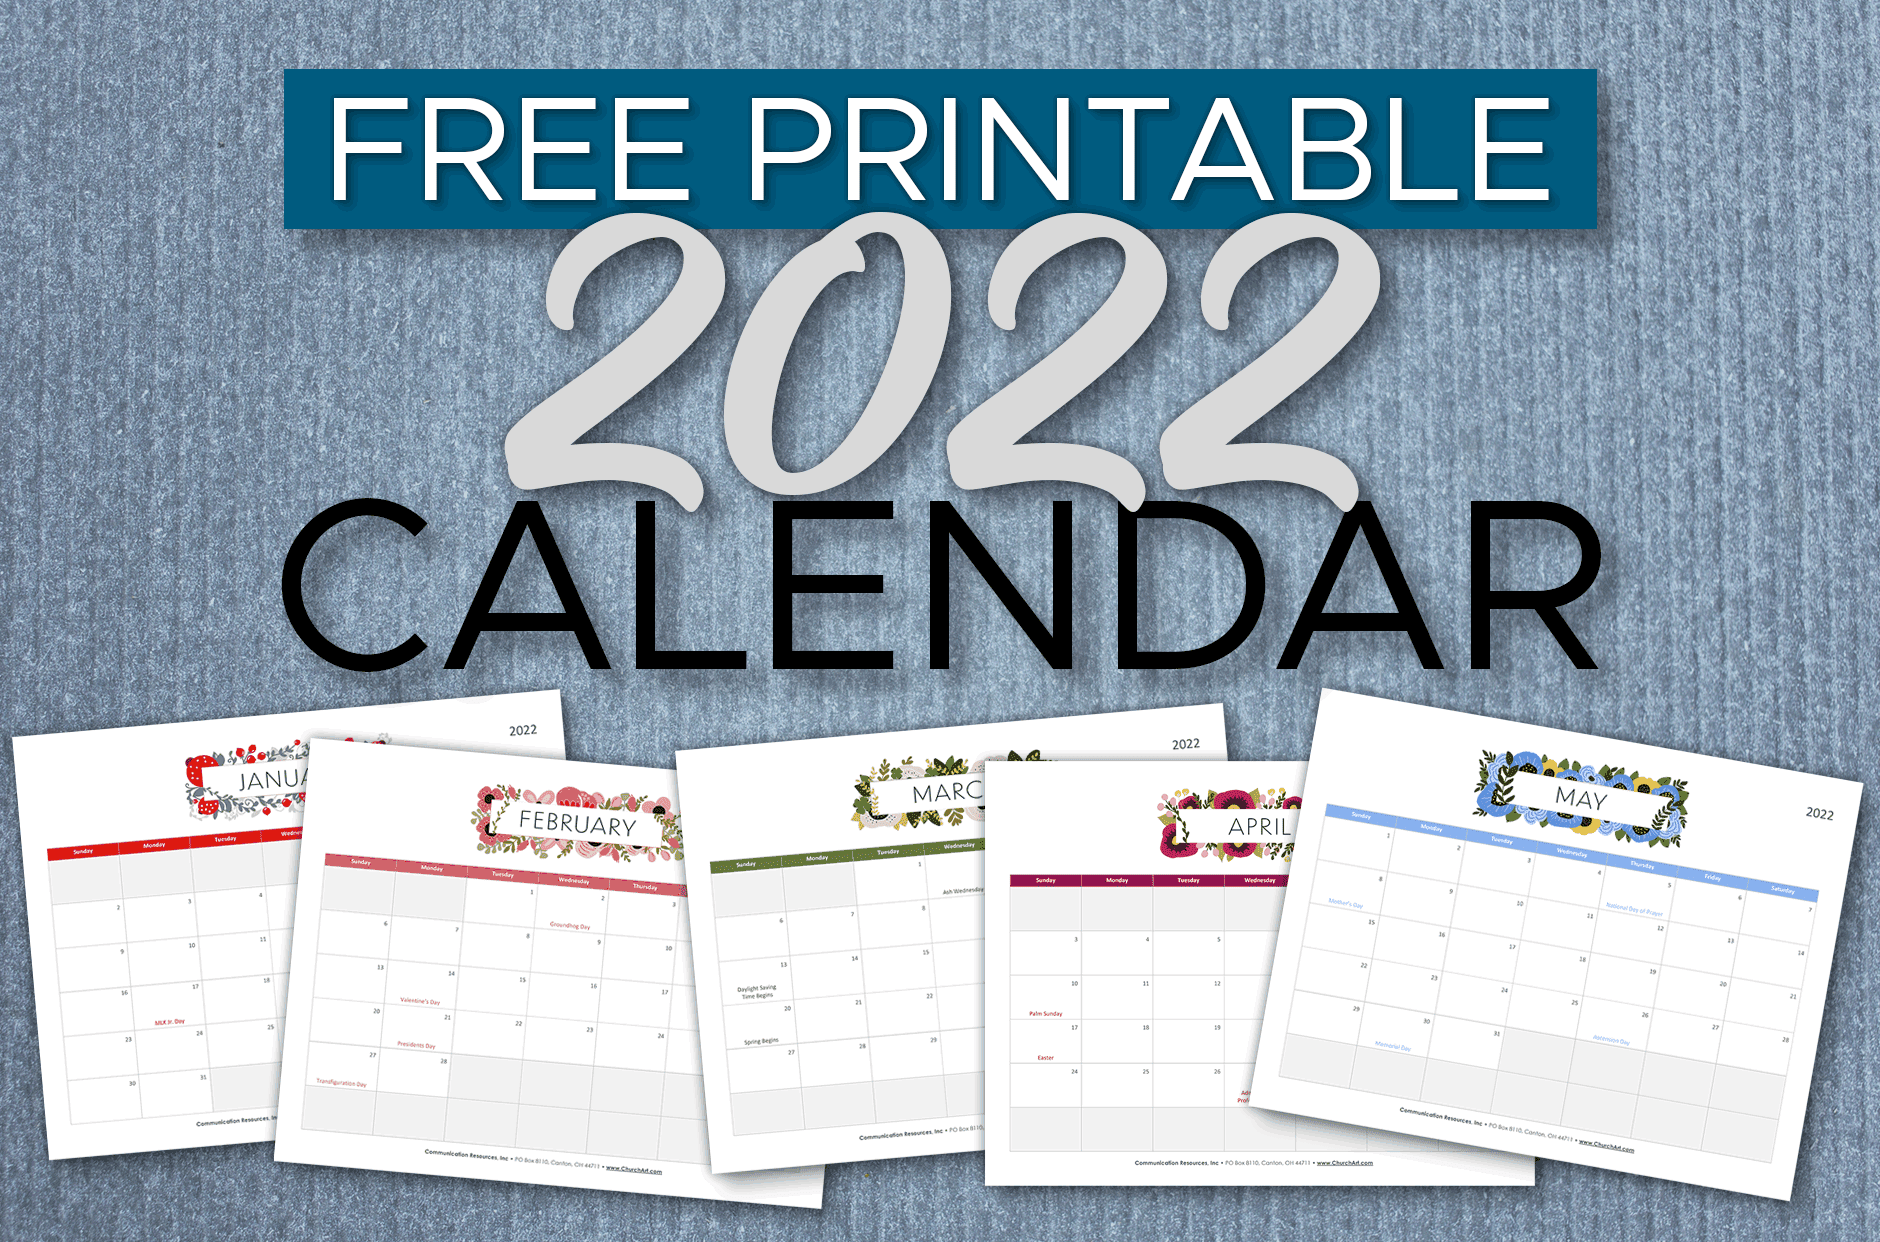 Presbyterian Church Calendar 2022 Free Printable 2022 Church Calendar | Churchart.com Blog